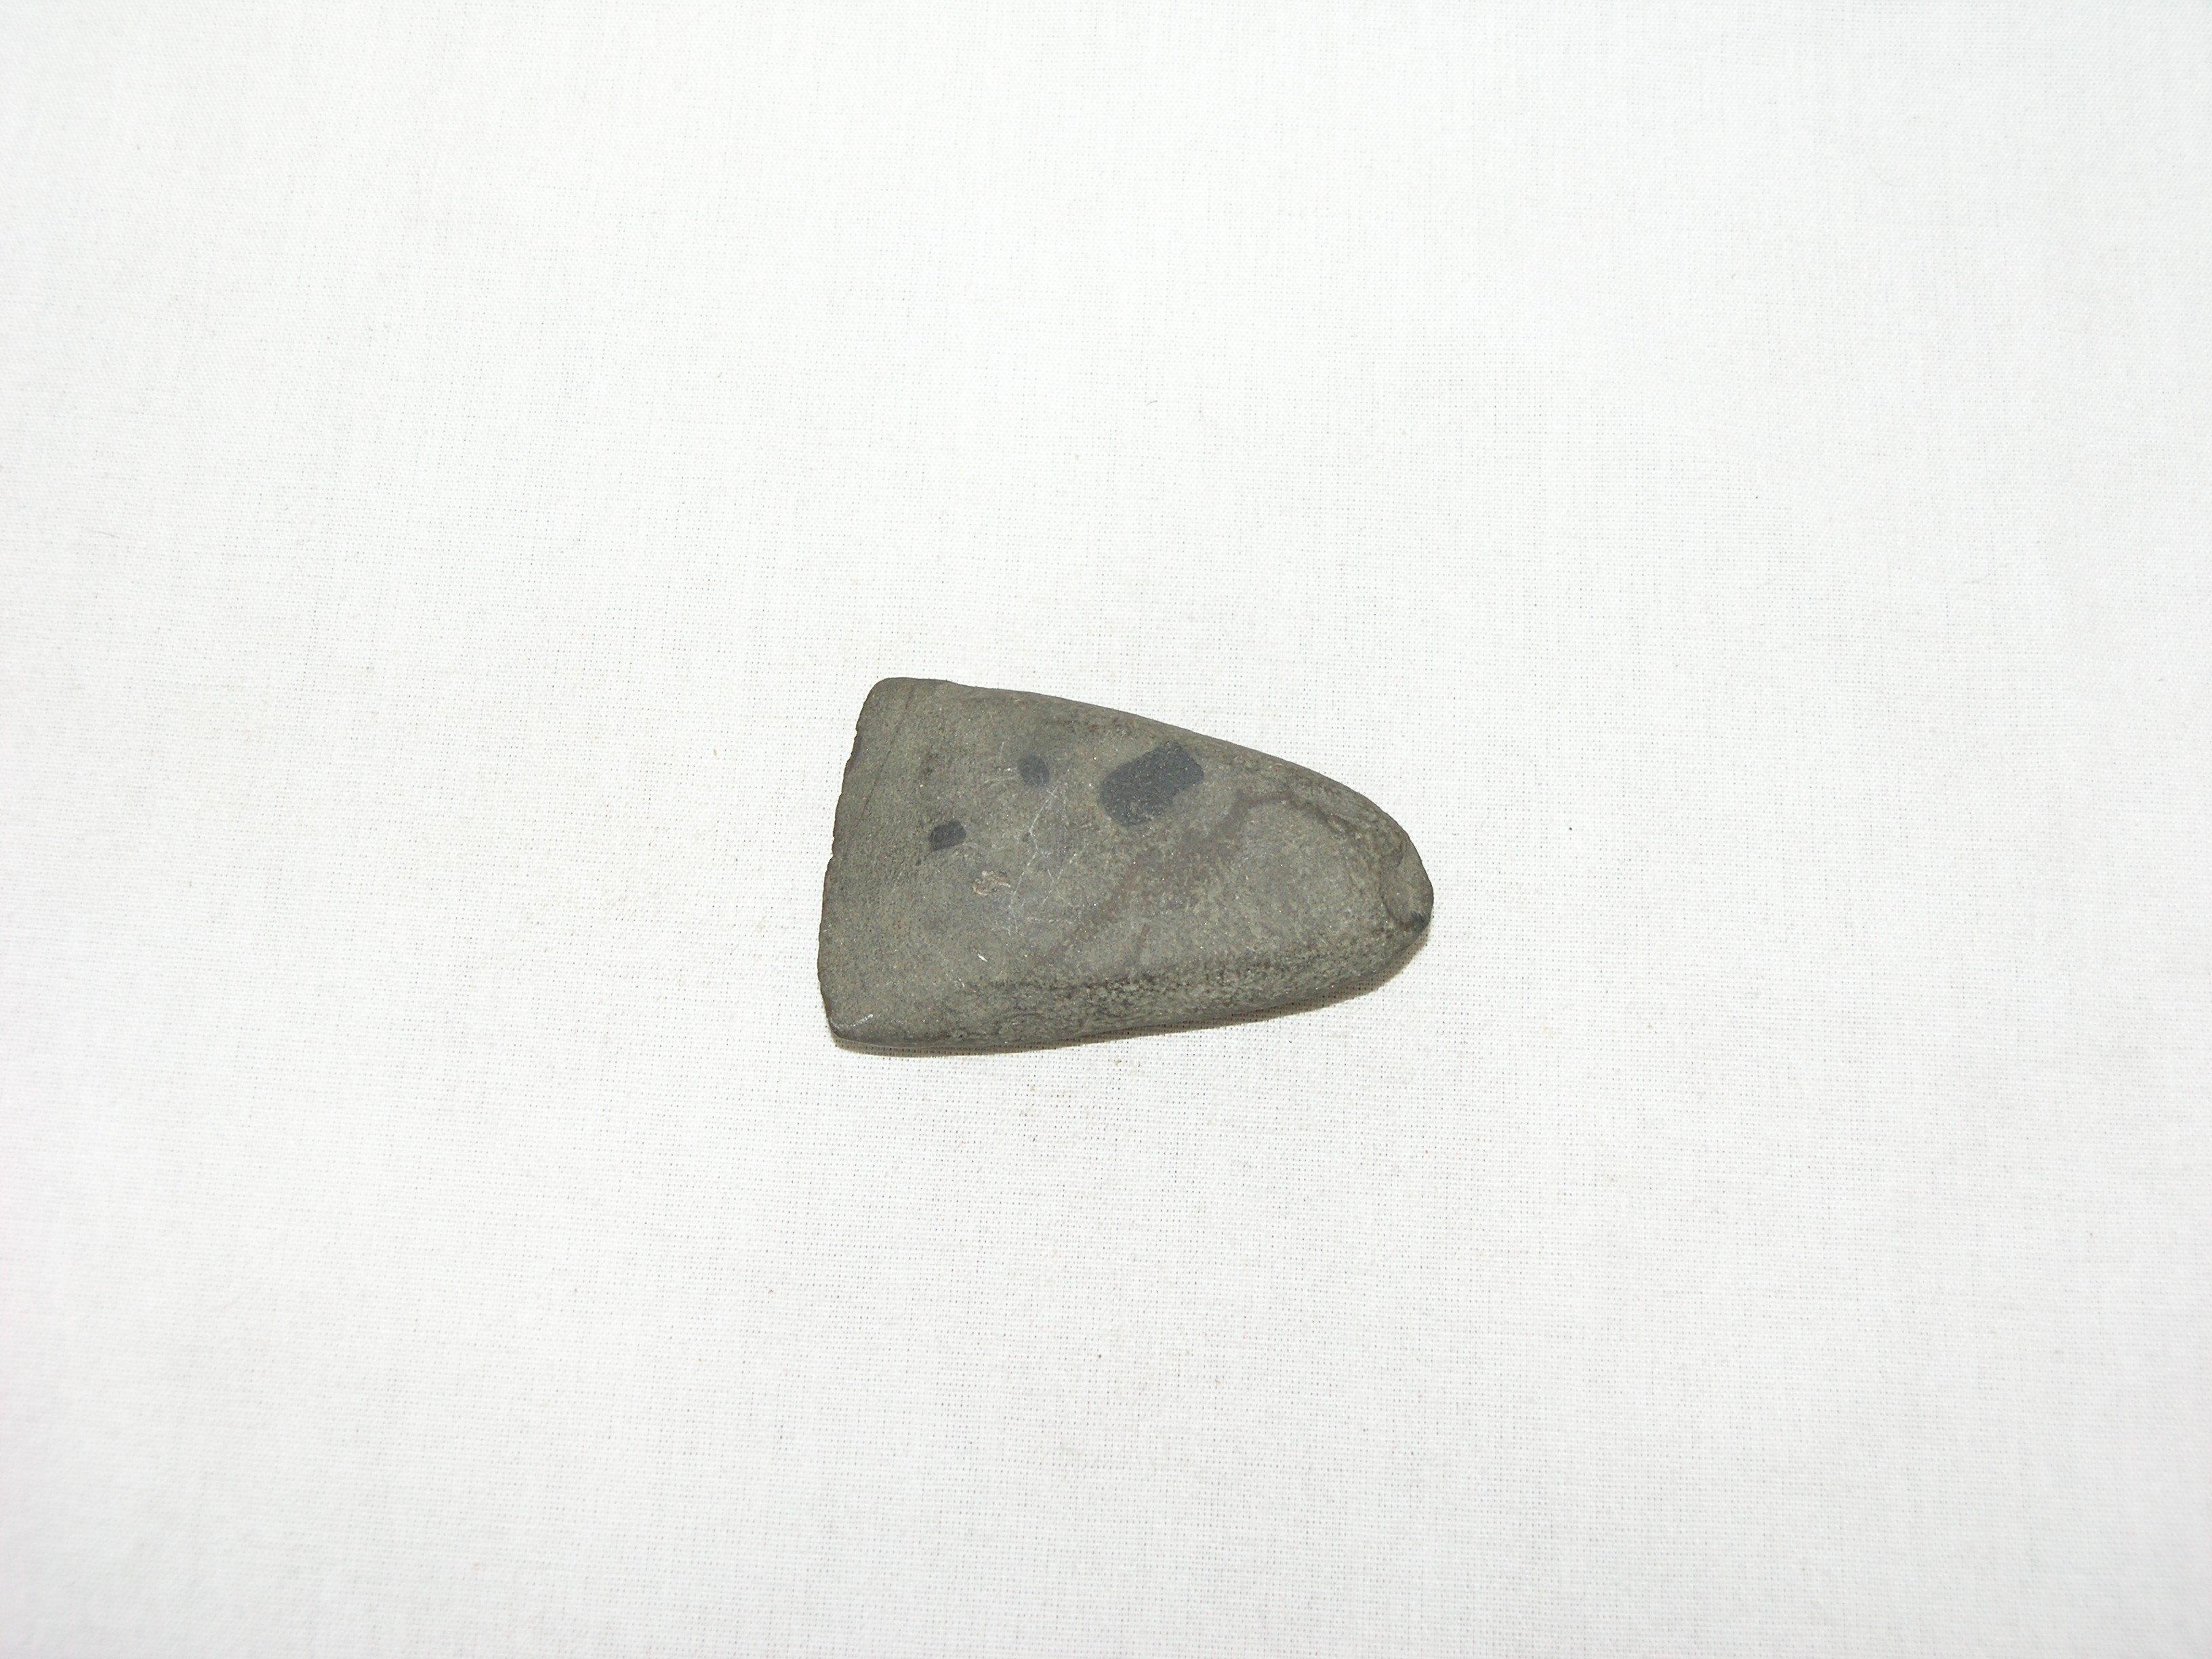 Vintage American Indian Stone Celt.   3" x 2"